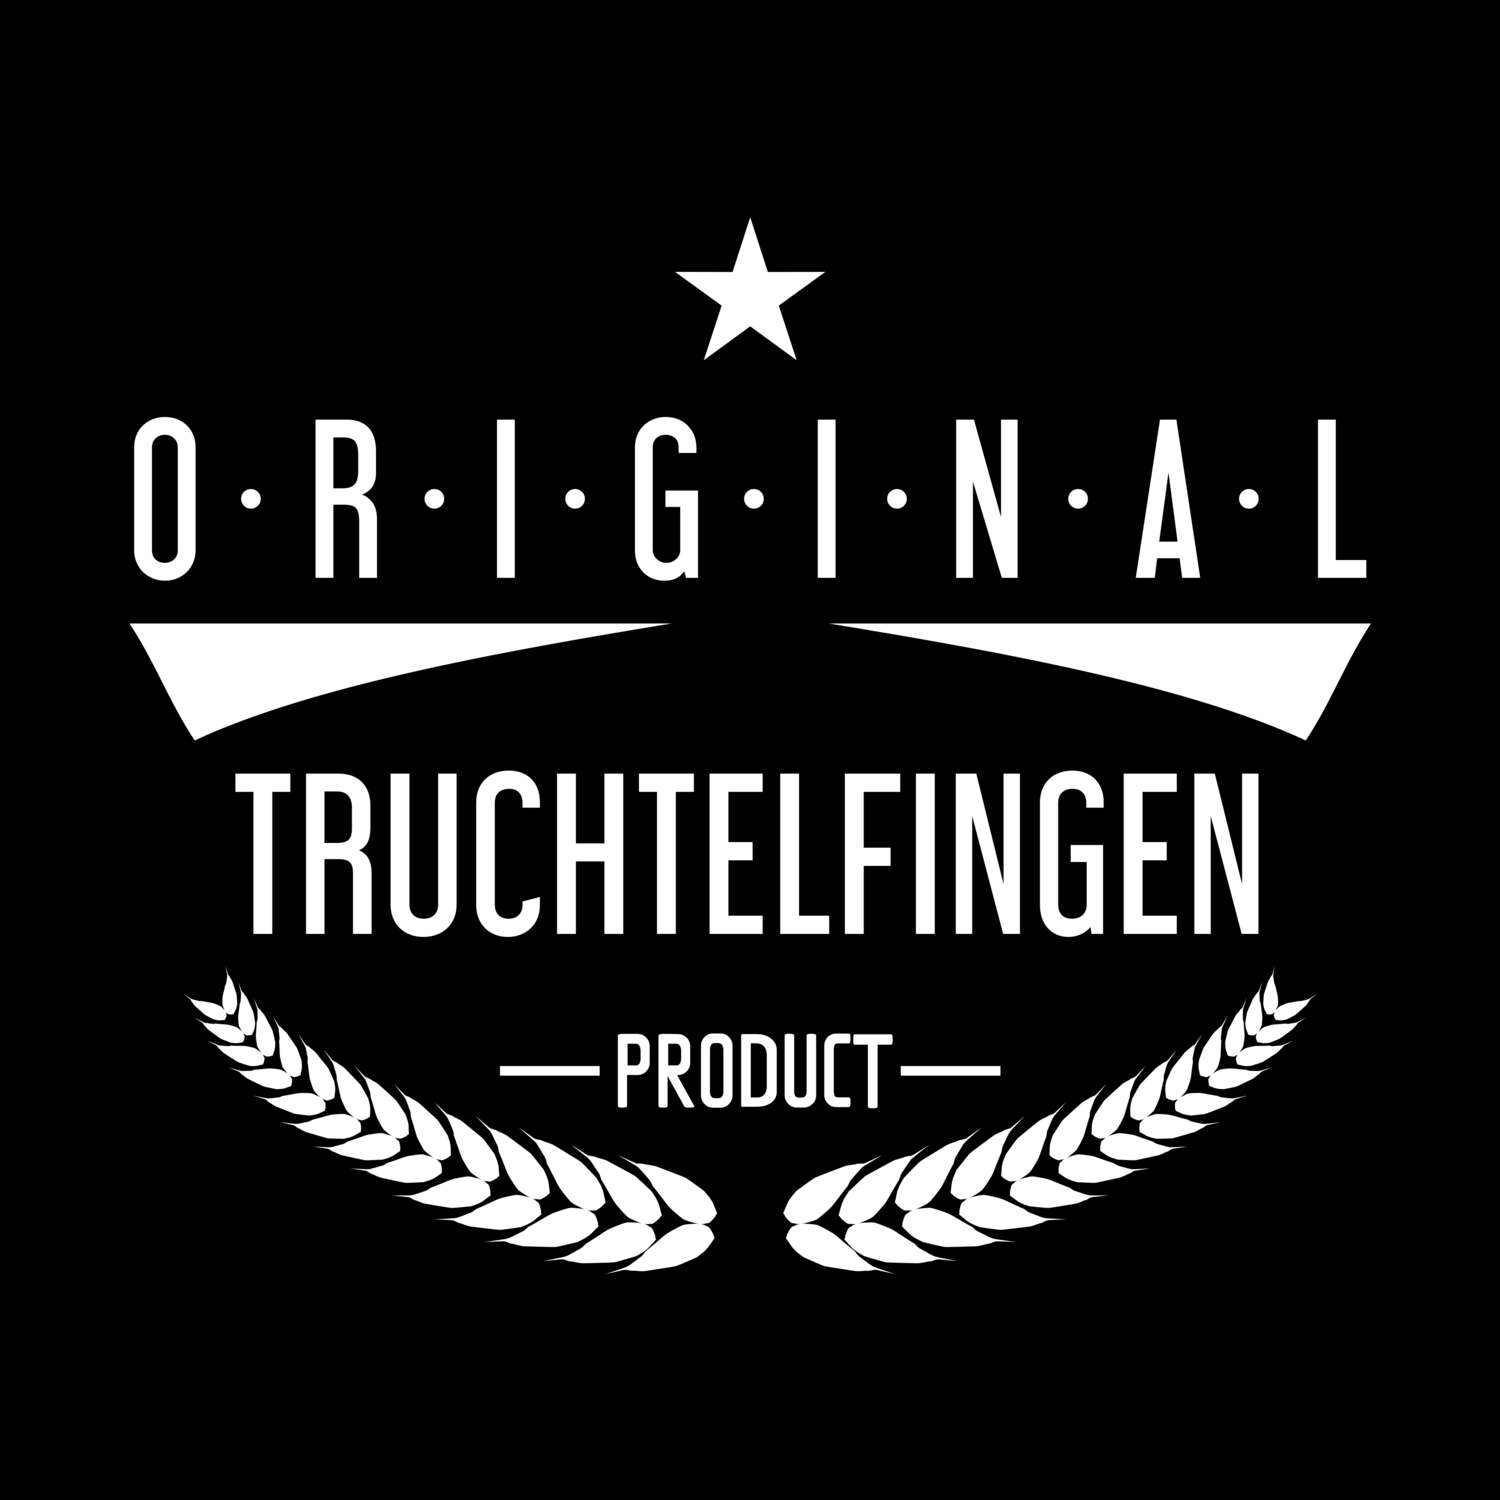 Truchtelfingen T-Shirt »Original Product«